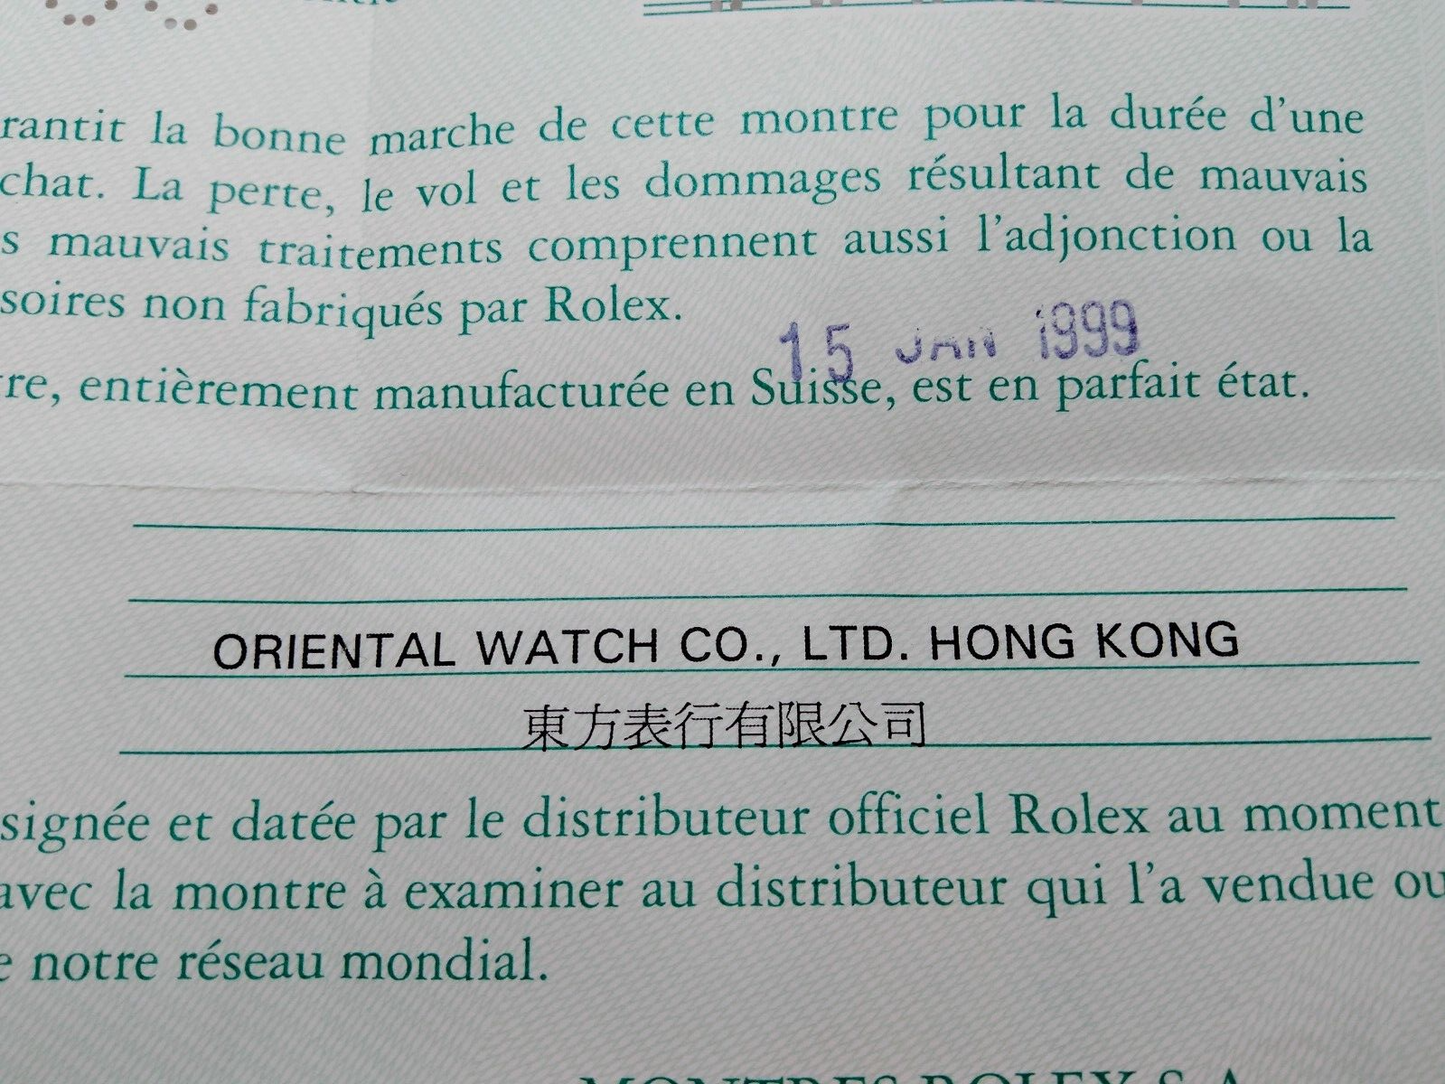 GENUINE ROLEX 14000 Air-King watch warranty guarantee paper 1999' 1010003y1S